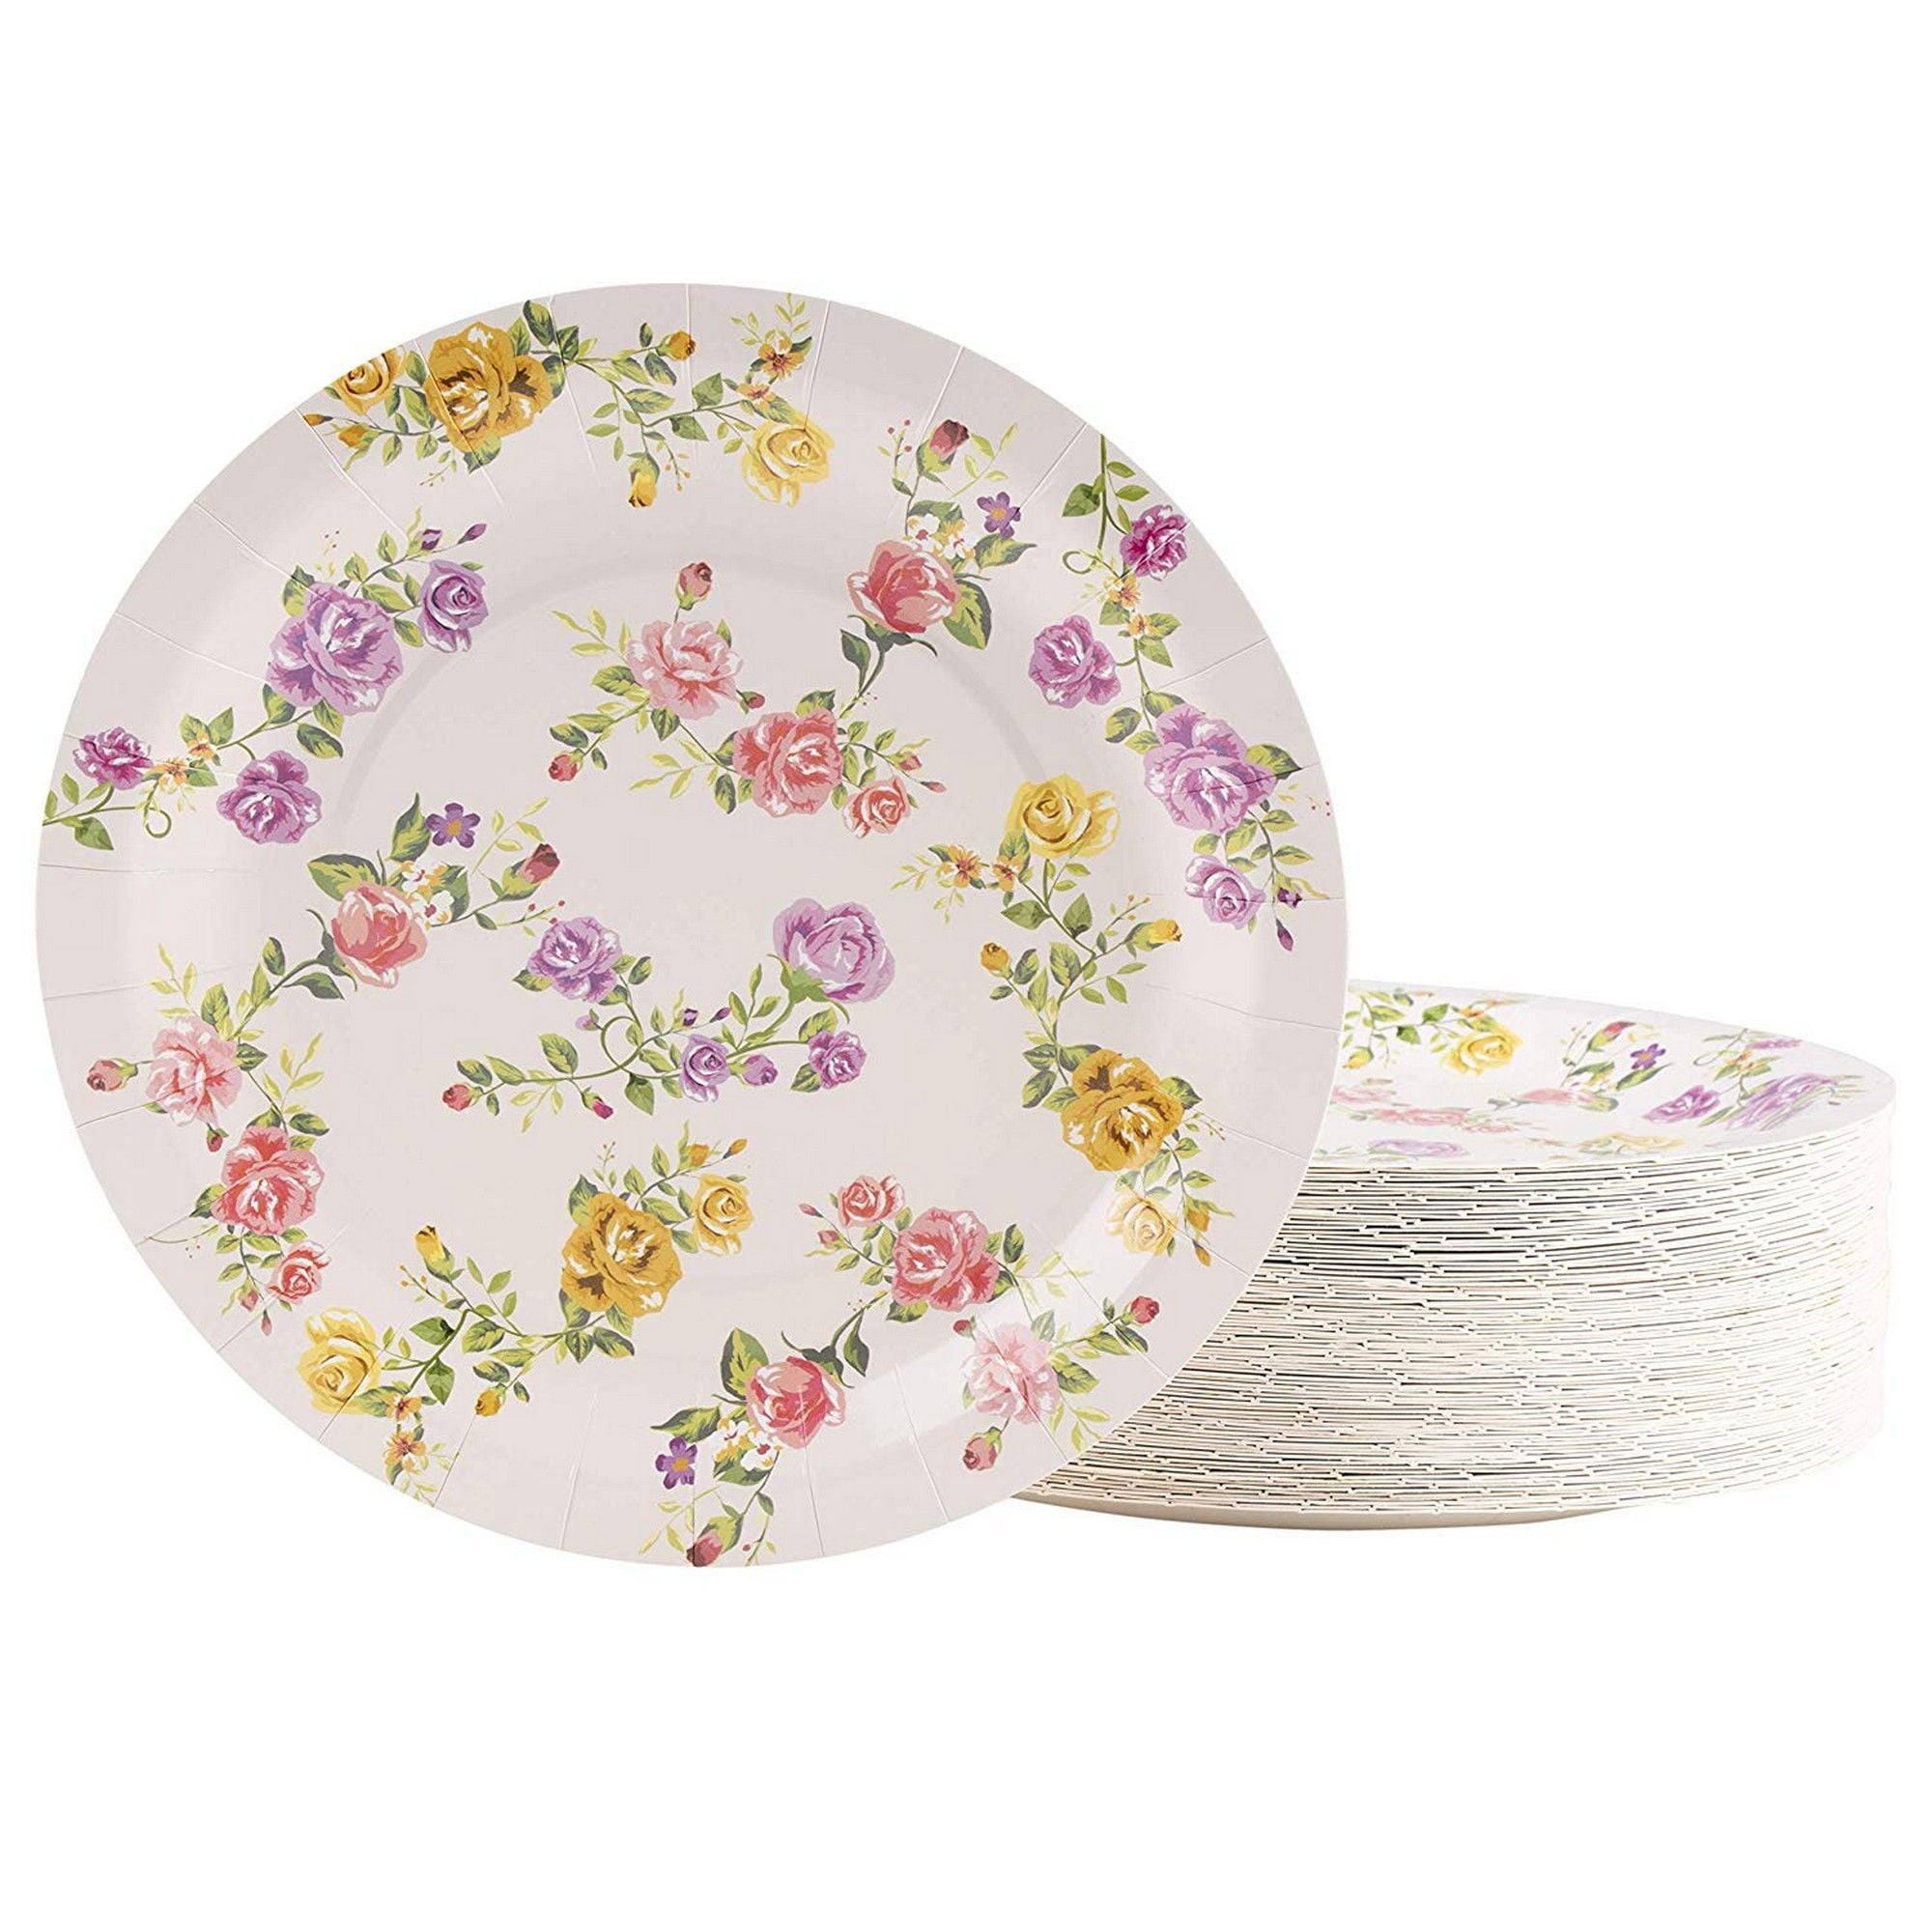 Floral Paper Plates - 80-Pack Disposable 9-Inch Floral Plates, Tea